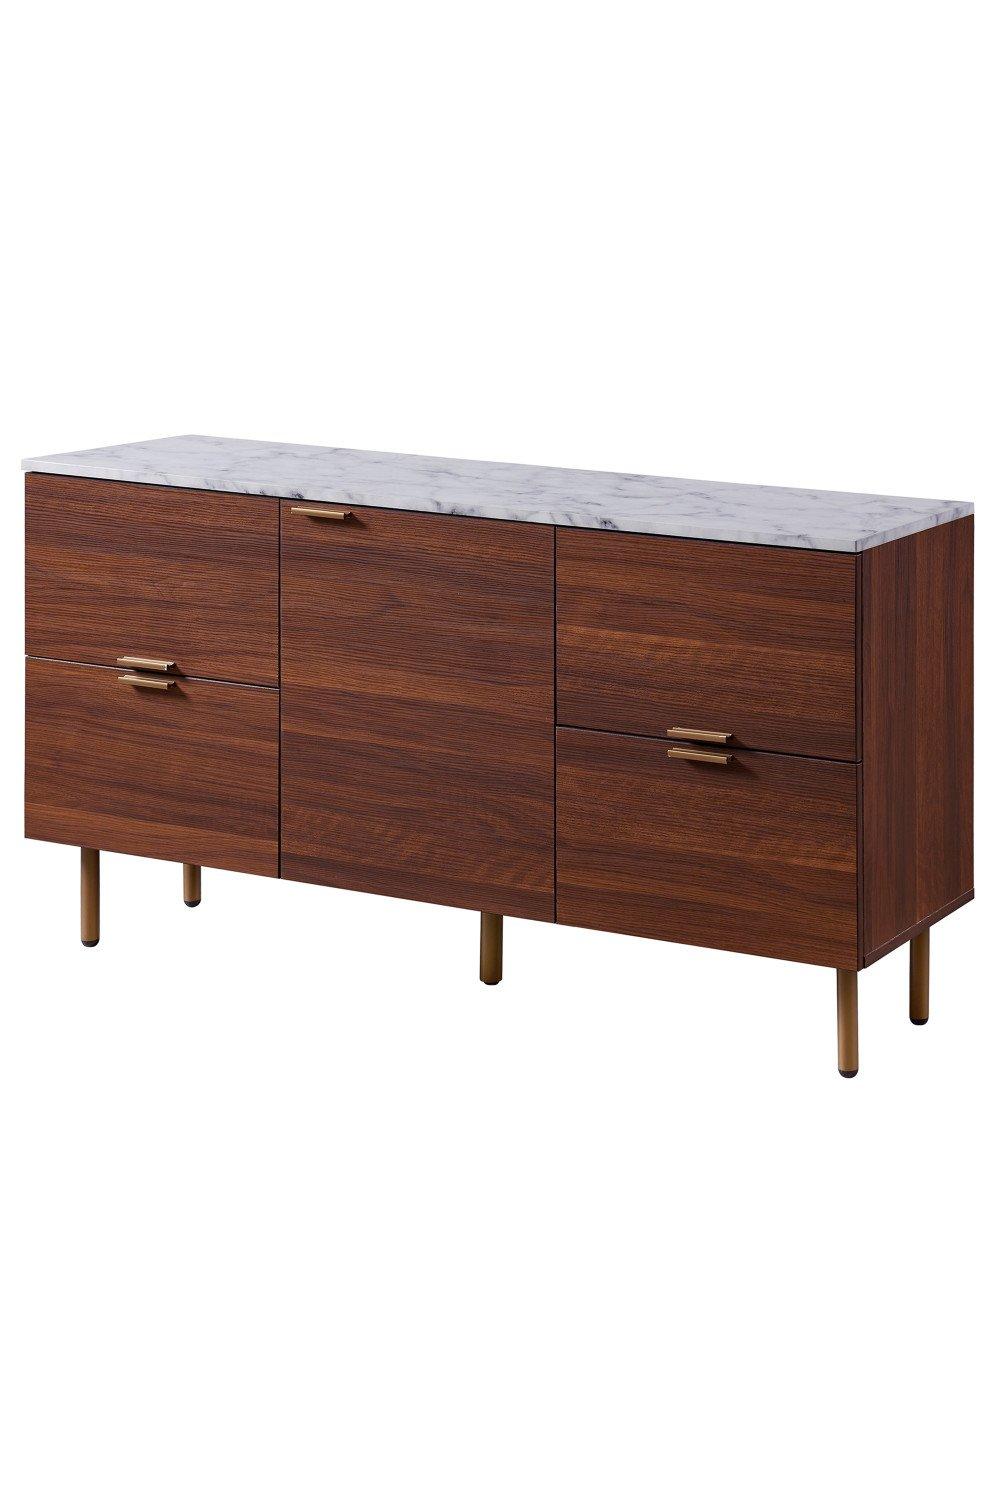 Ashton Large Wooden Sideboard Cabinet